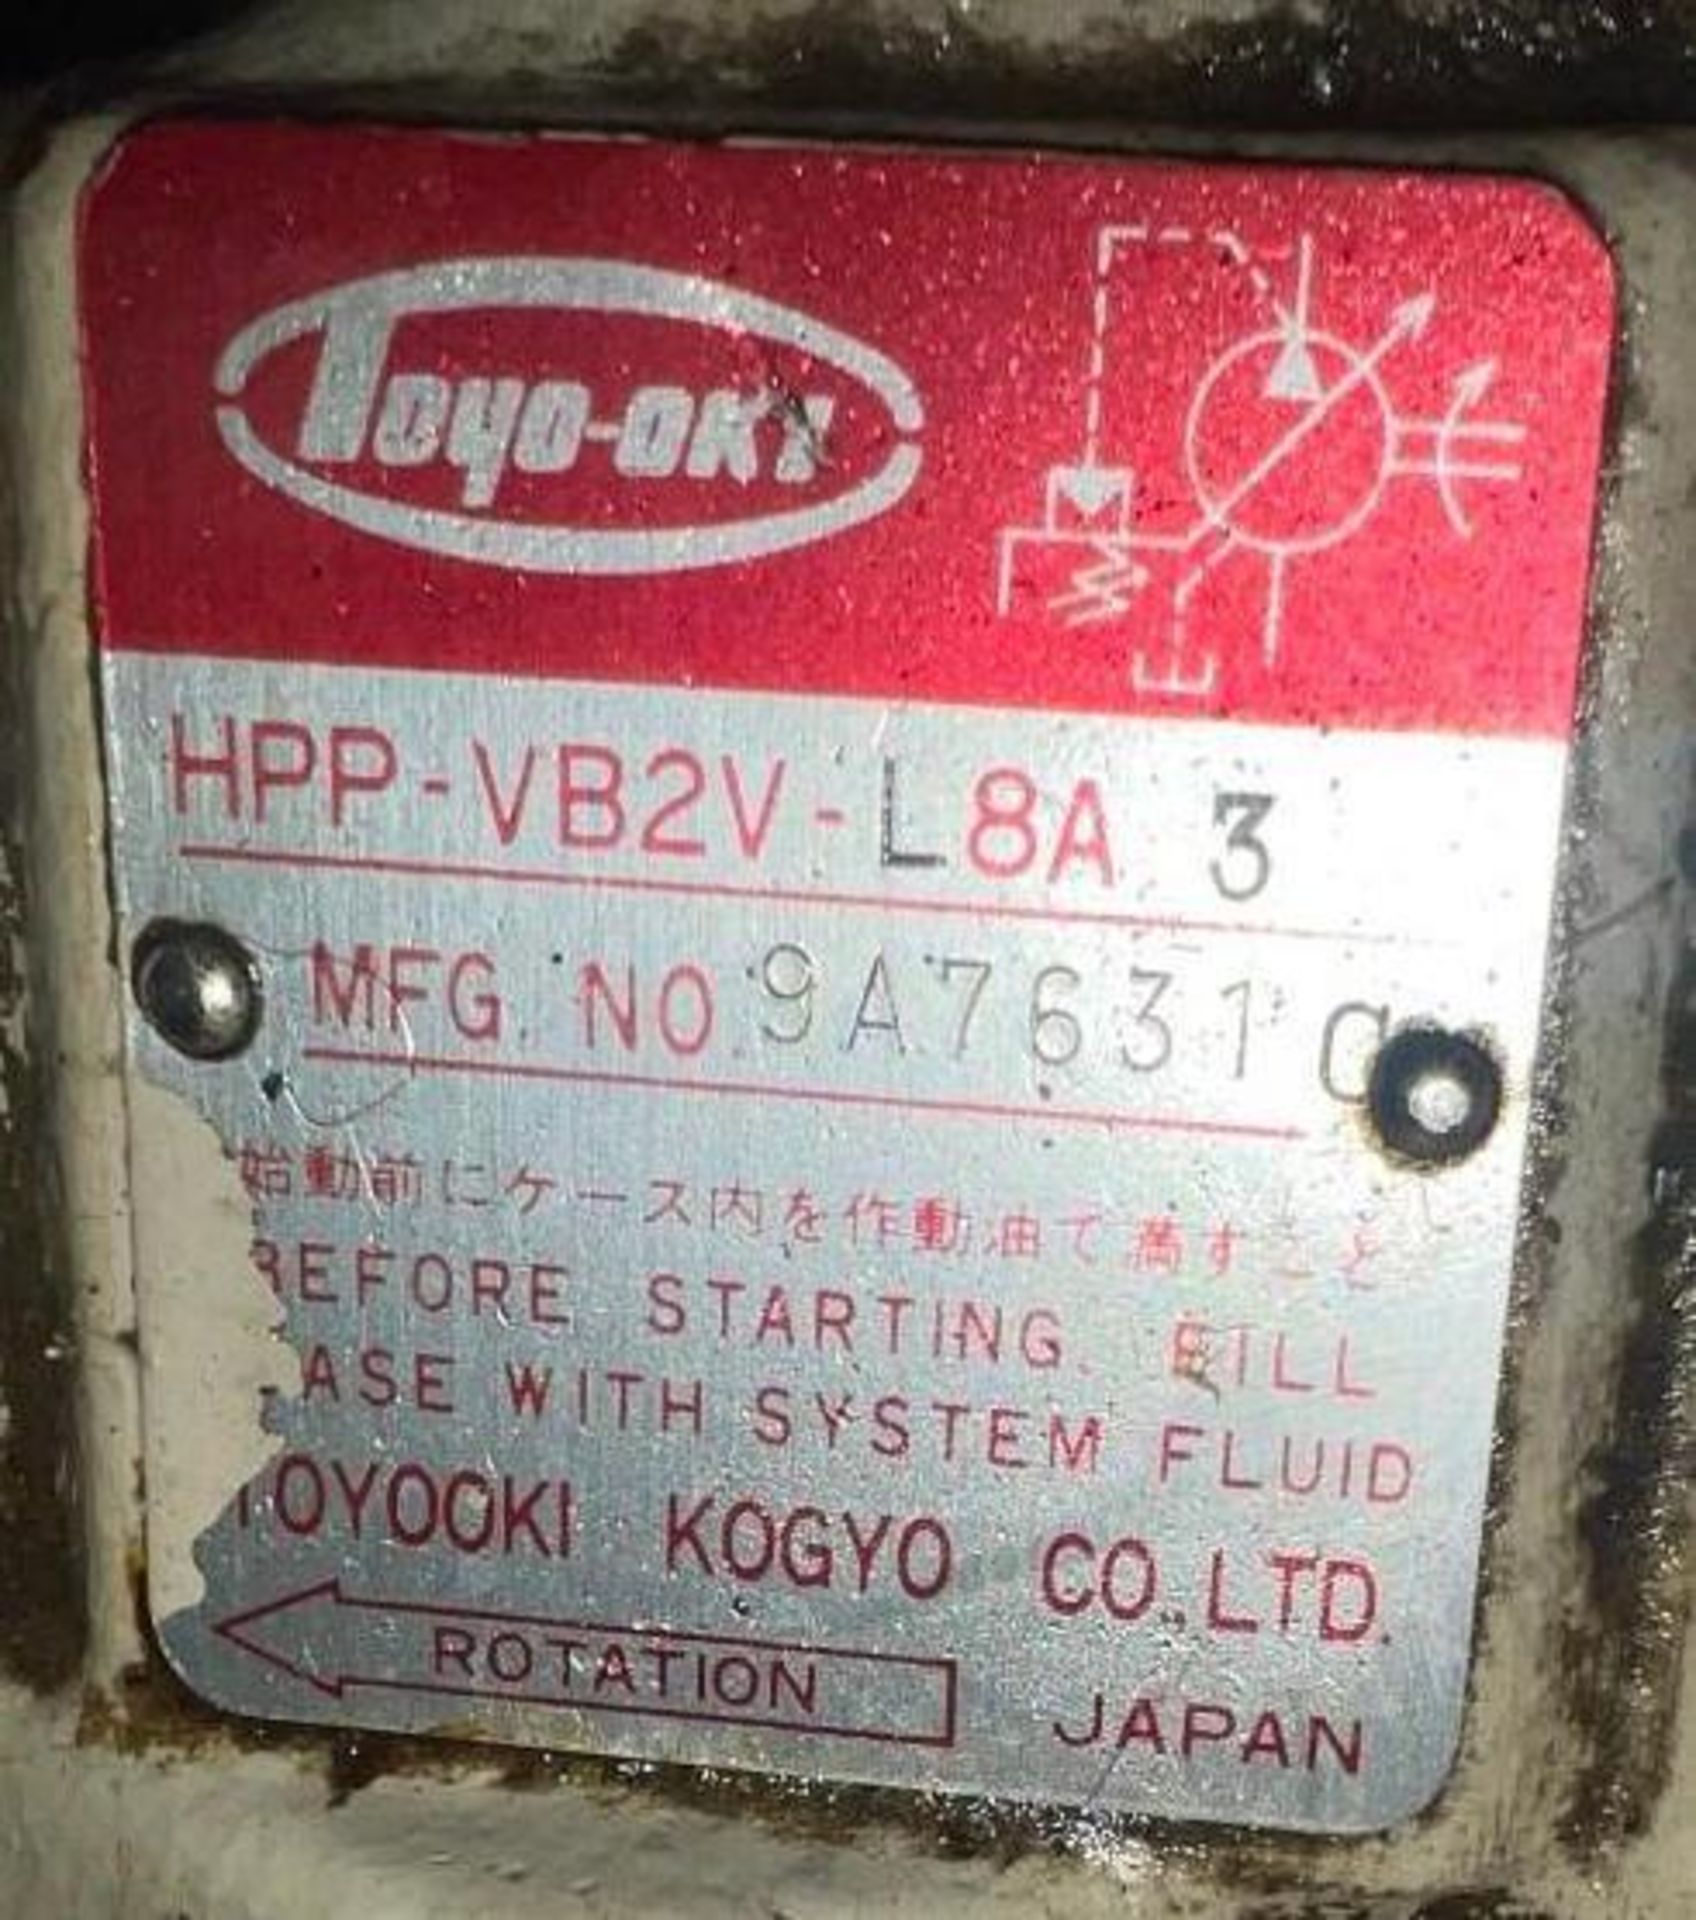 Lot of (6) Toyo-Oki #HPP-VB2V-L8A3 Hydraulic Pumps - Image 4 of 4